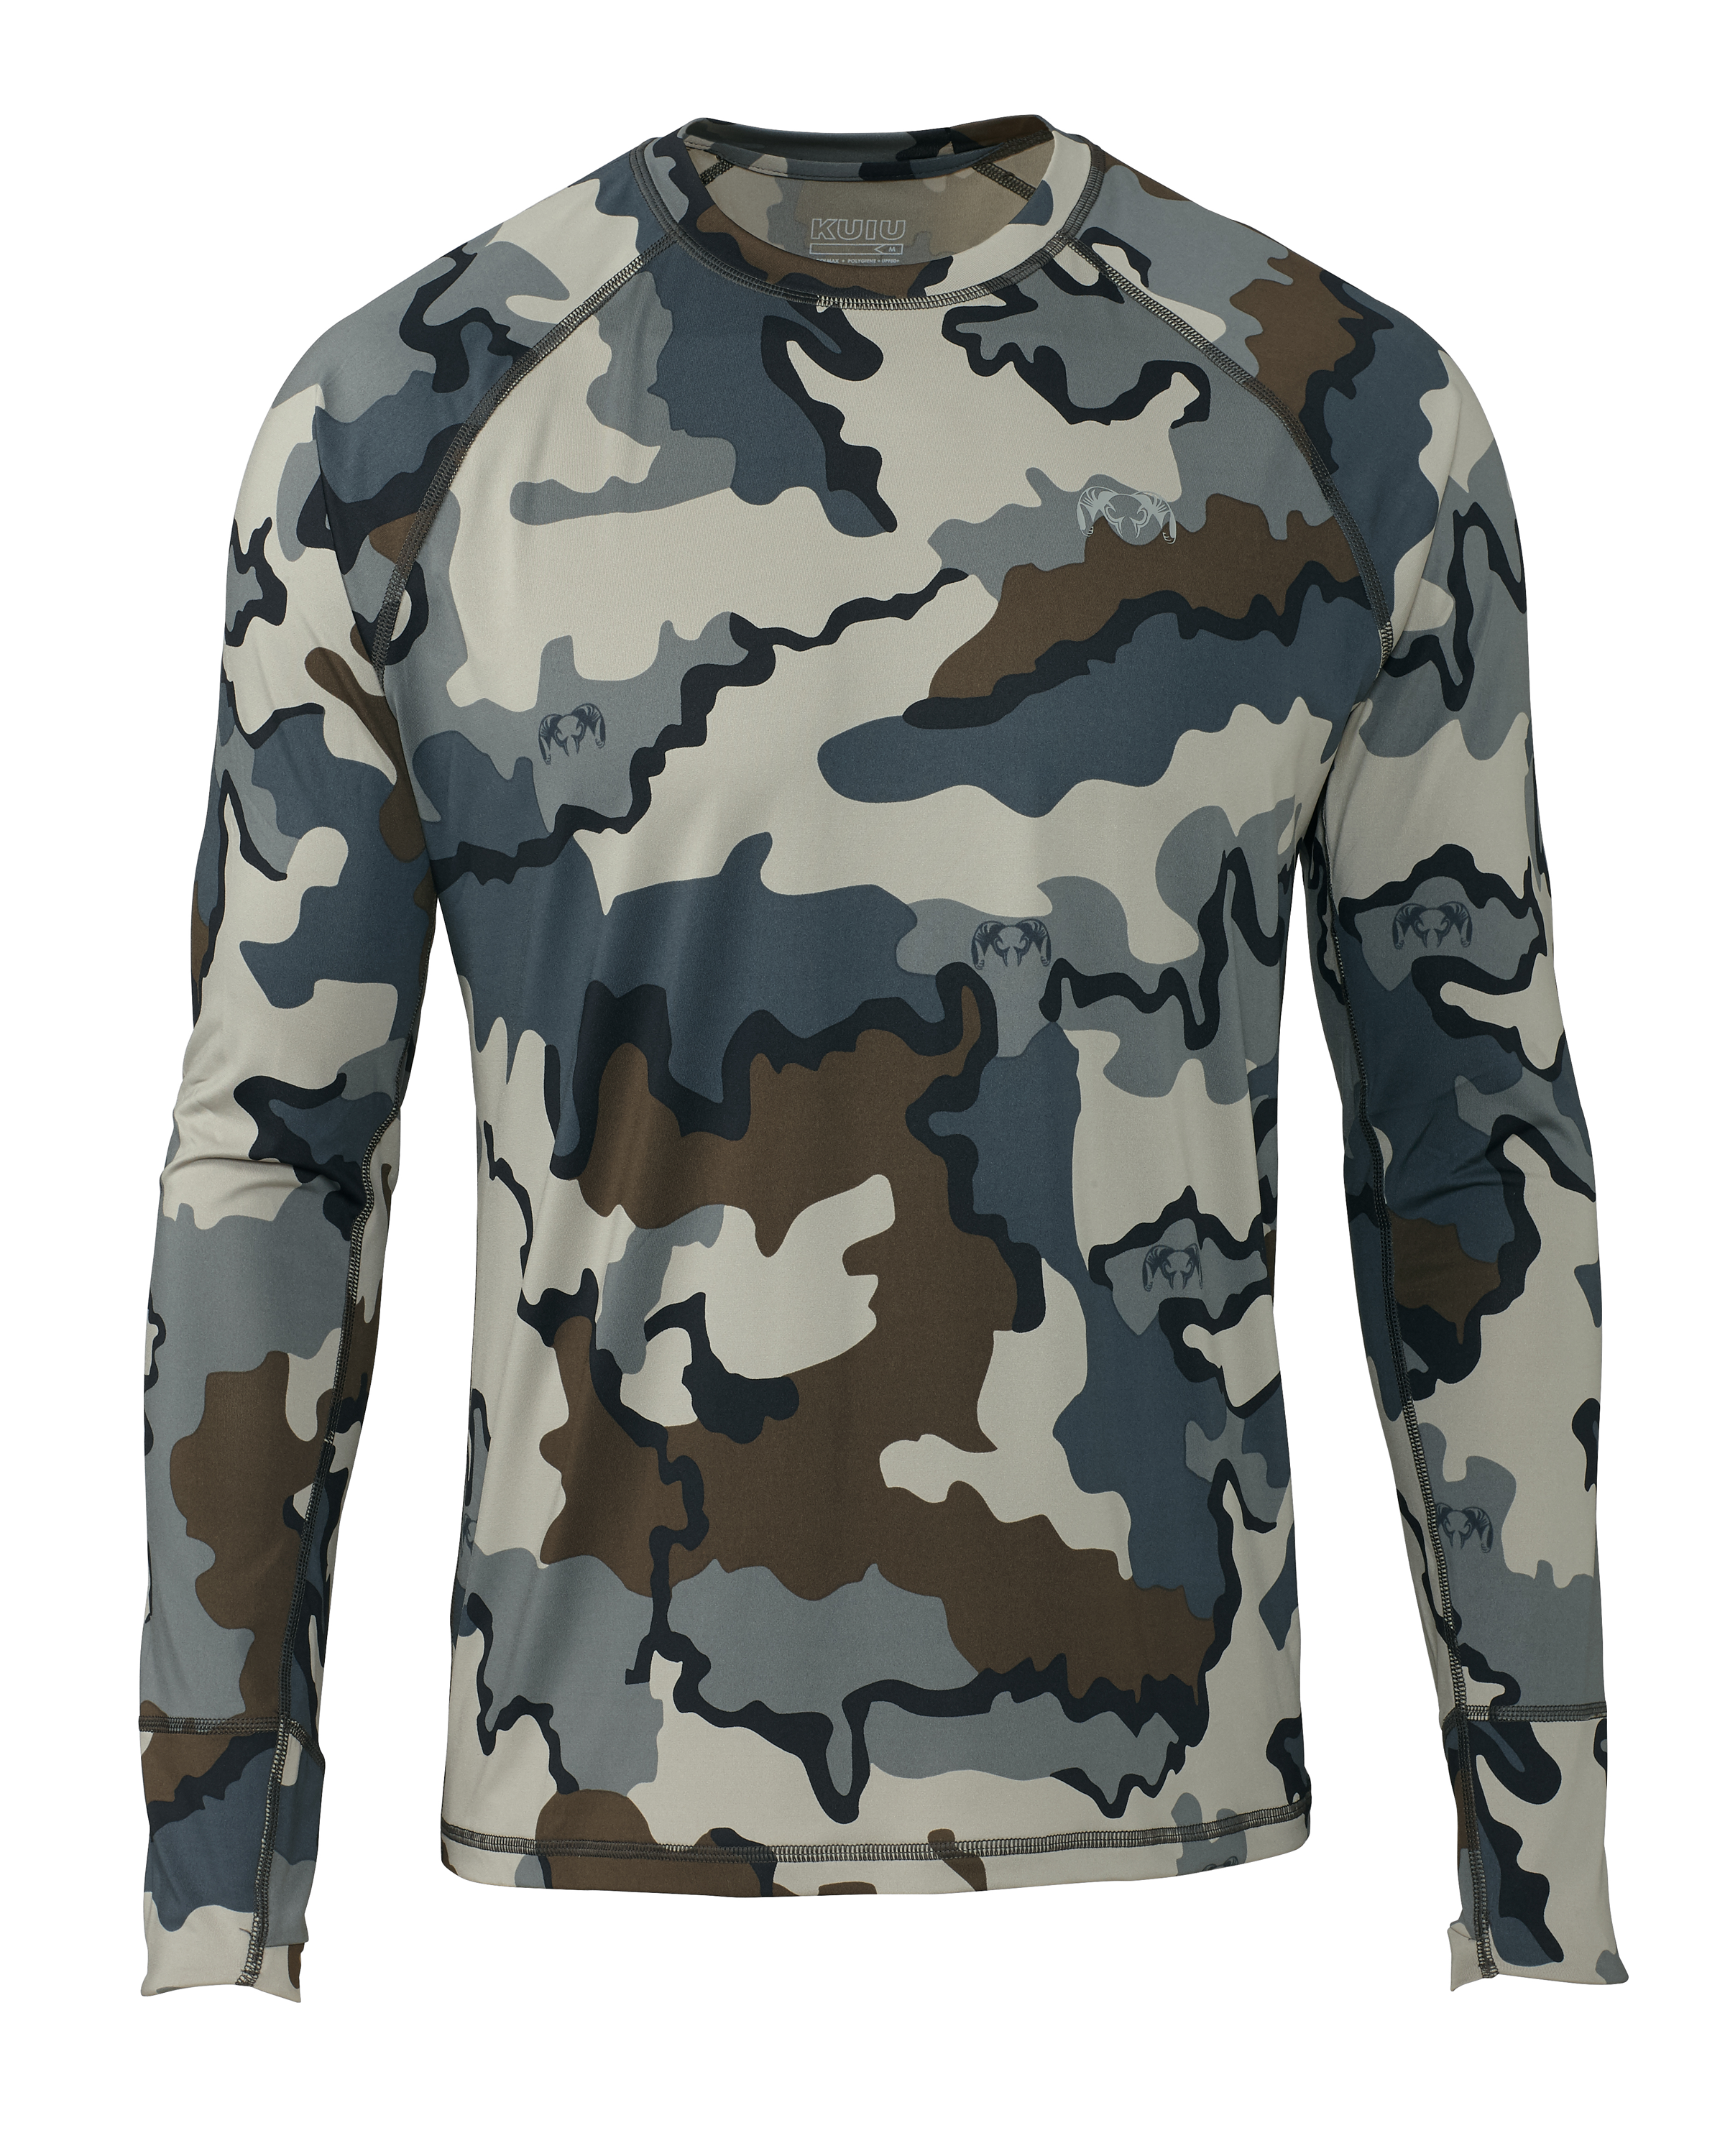 KUIU Gila Long Sleeves Crew Hunting Shirt in Vias | Size 3XL